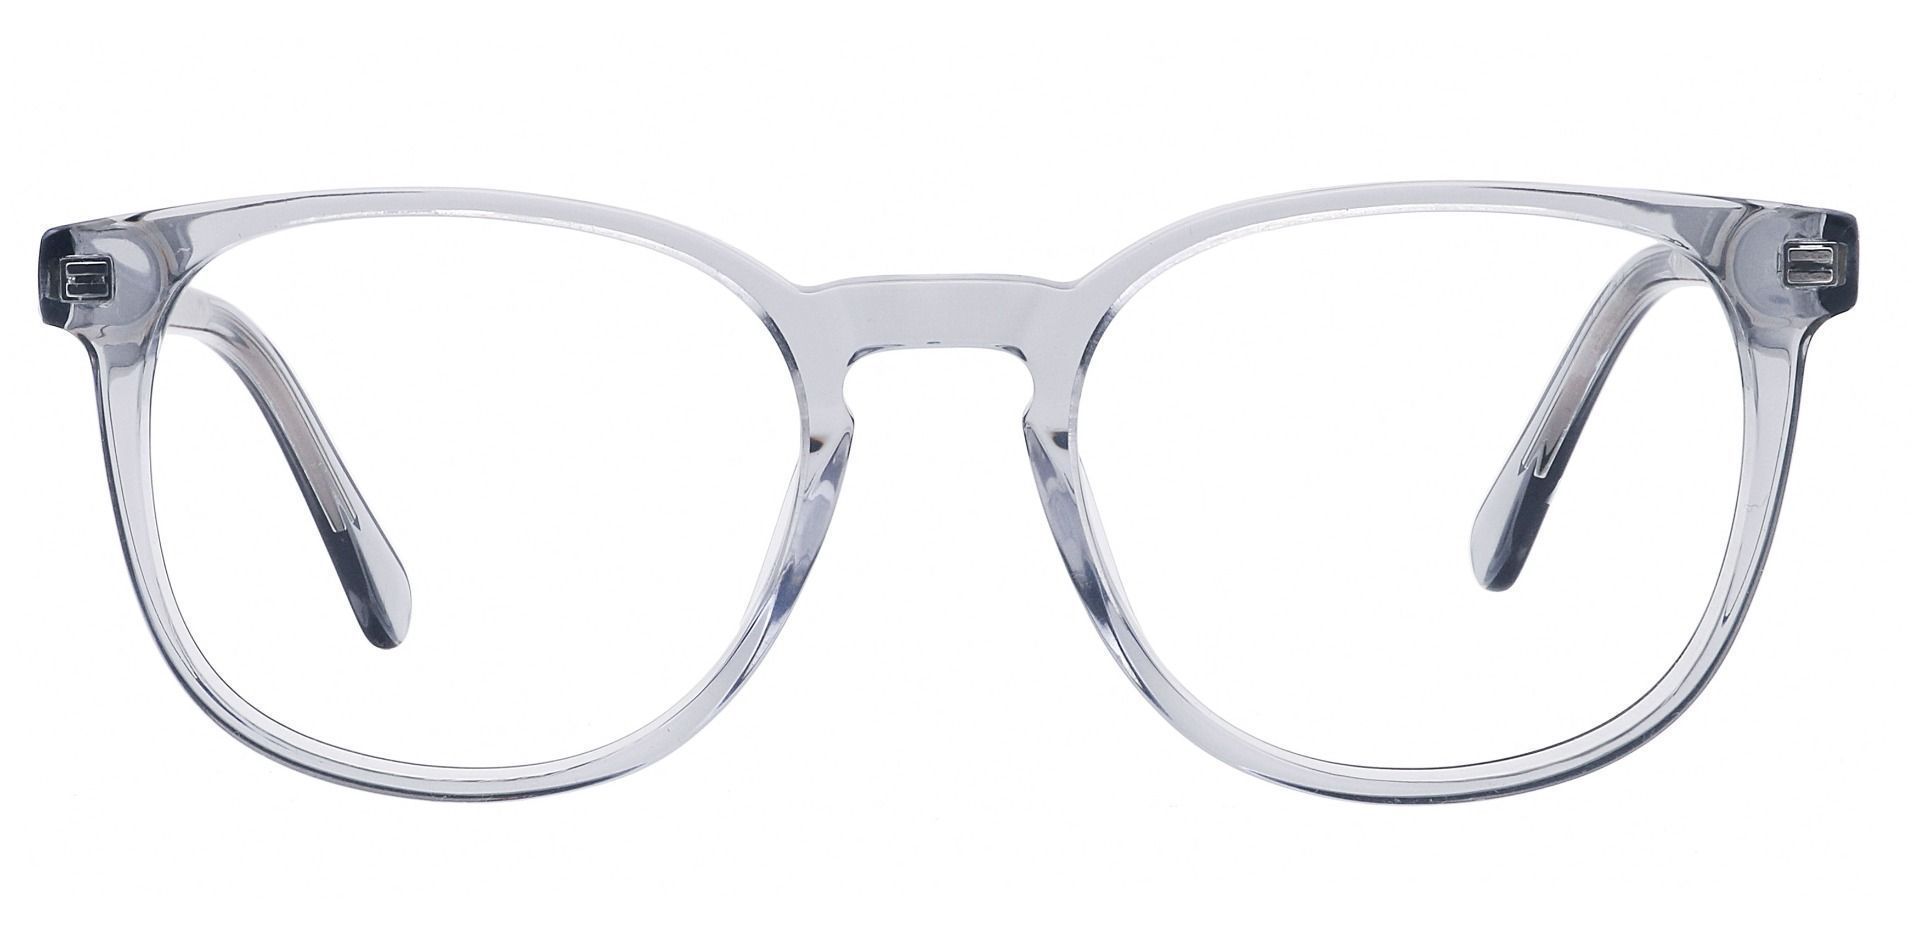 Nebula Round Lined Bifocal Glasses - Gray